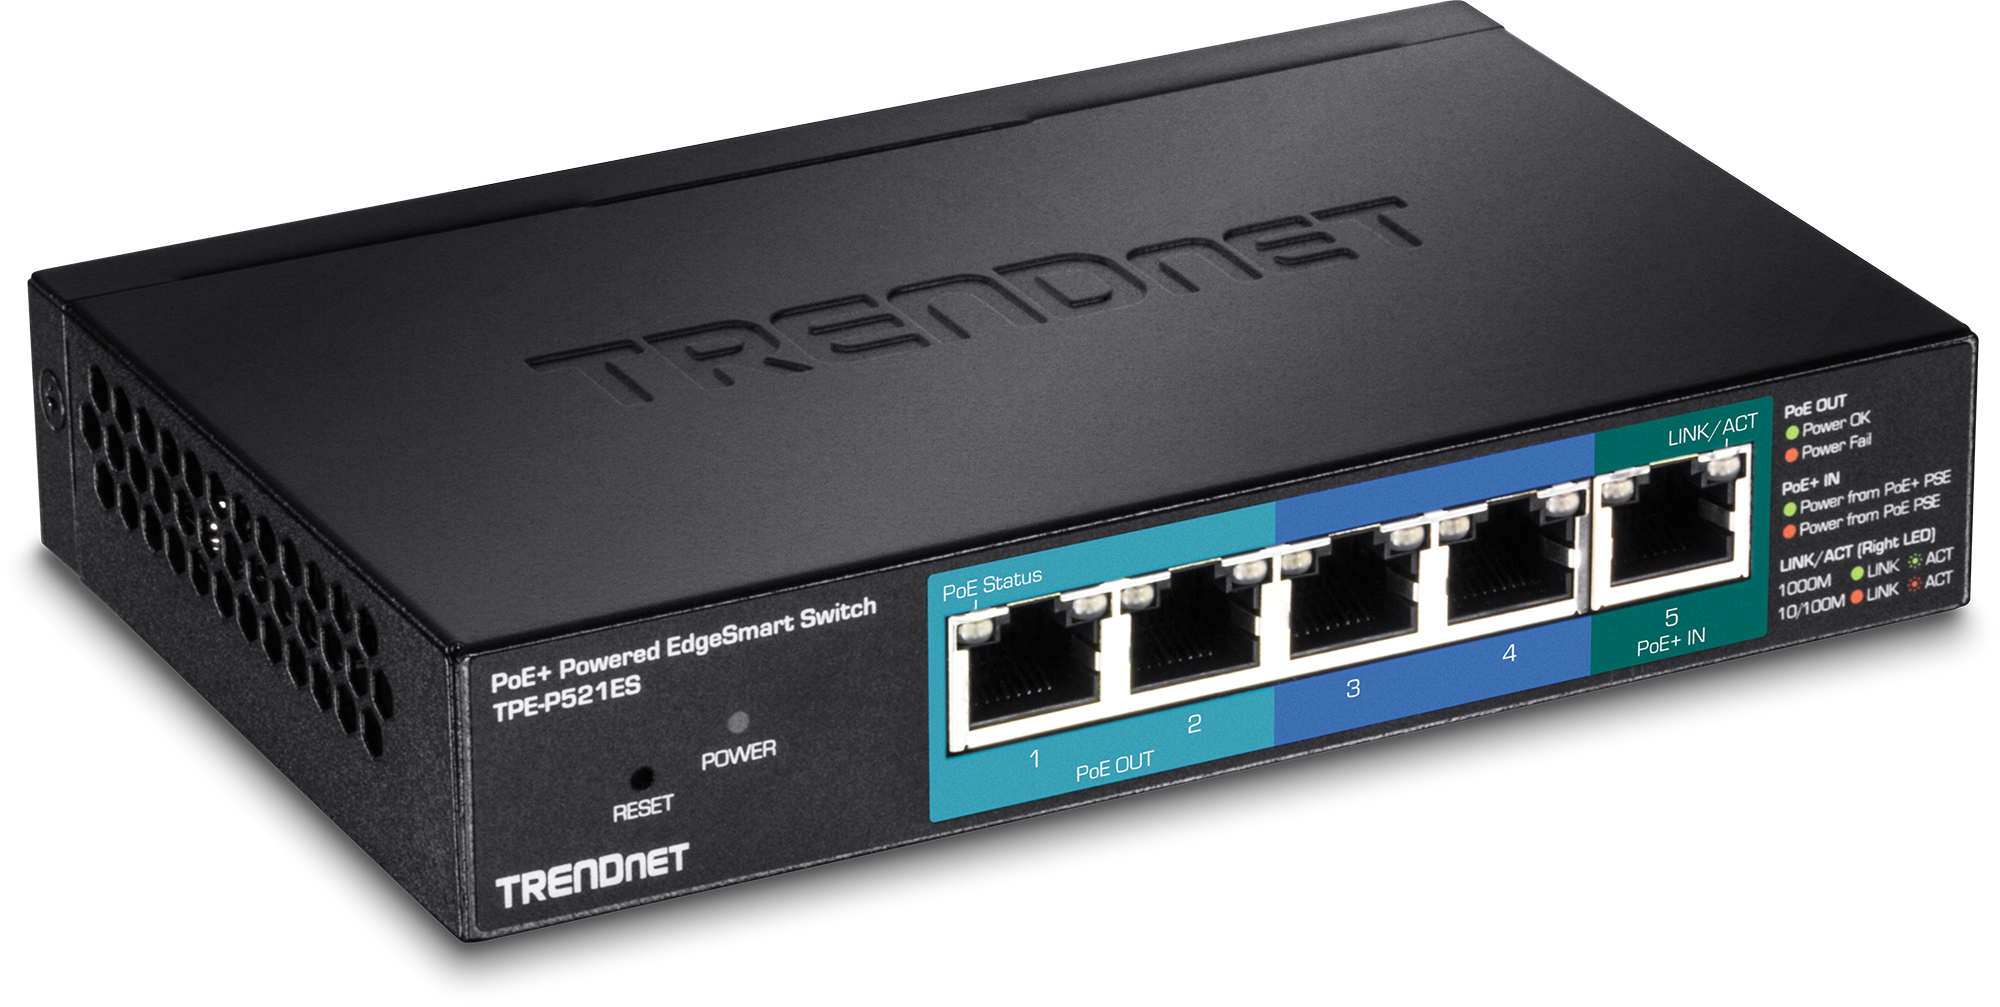 Trendnet TPE-P521ES 5-port Gigabit Poe+ Powered Edgesmart Switch With 